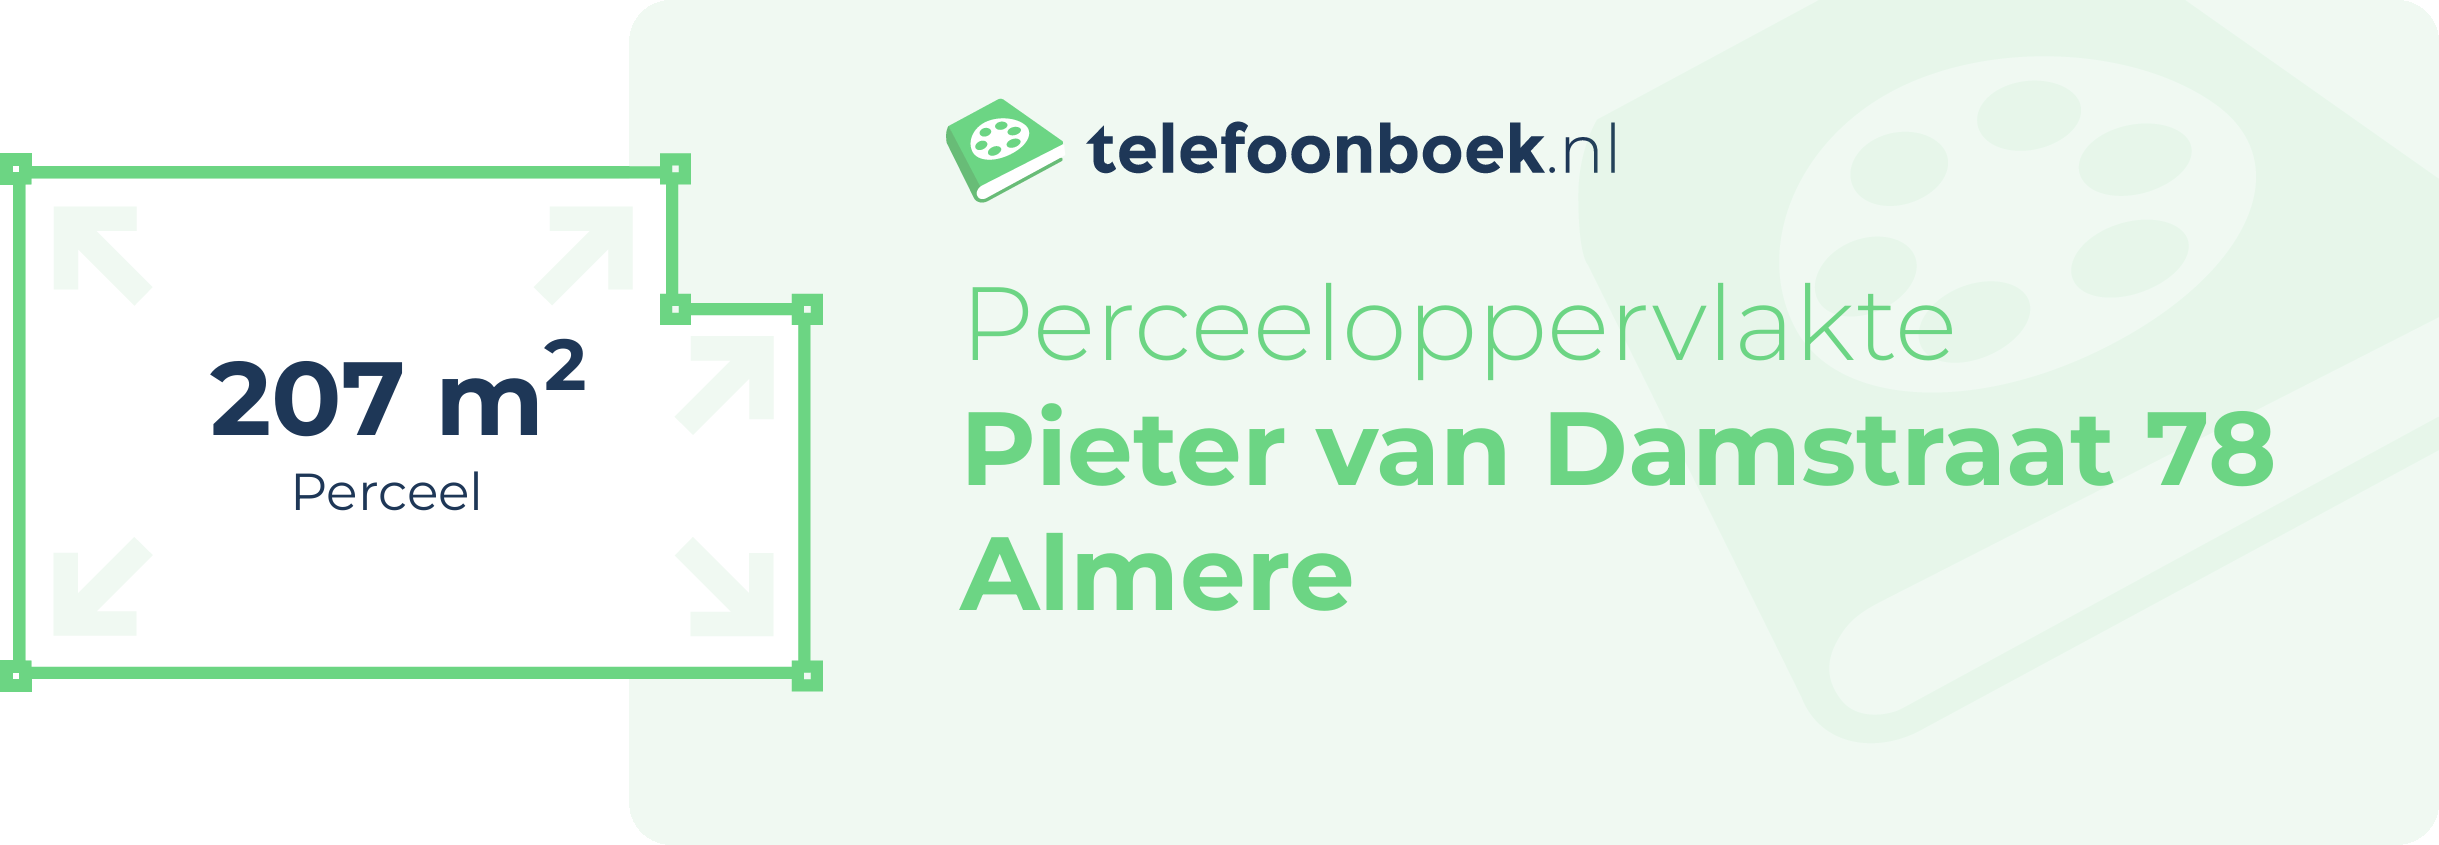 Perceeloppervlakte Pieter Van Damstraat 78 Almere